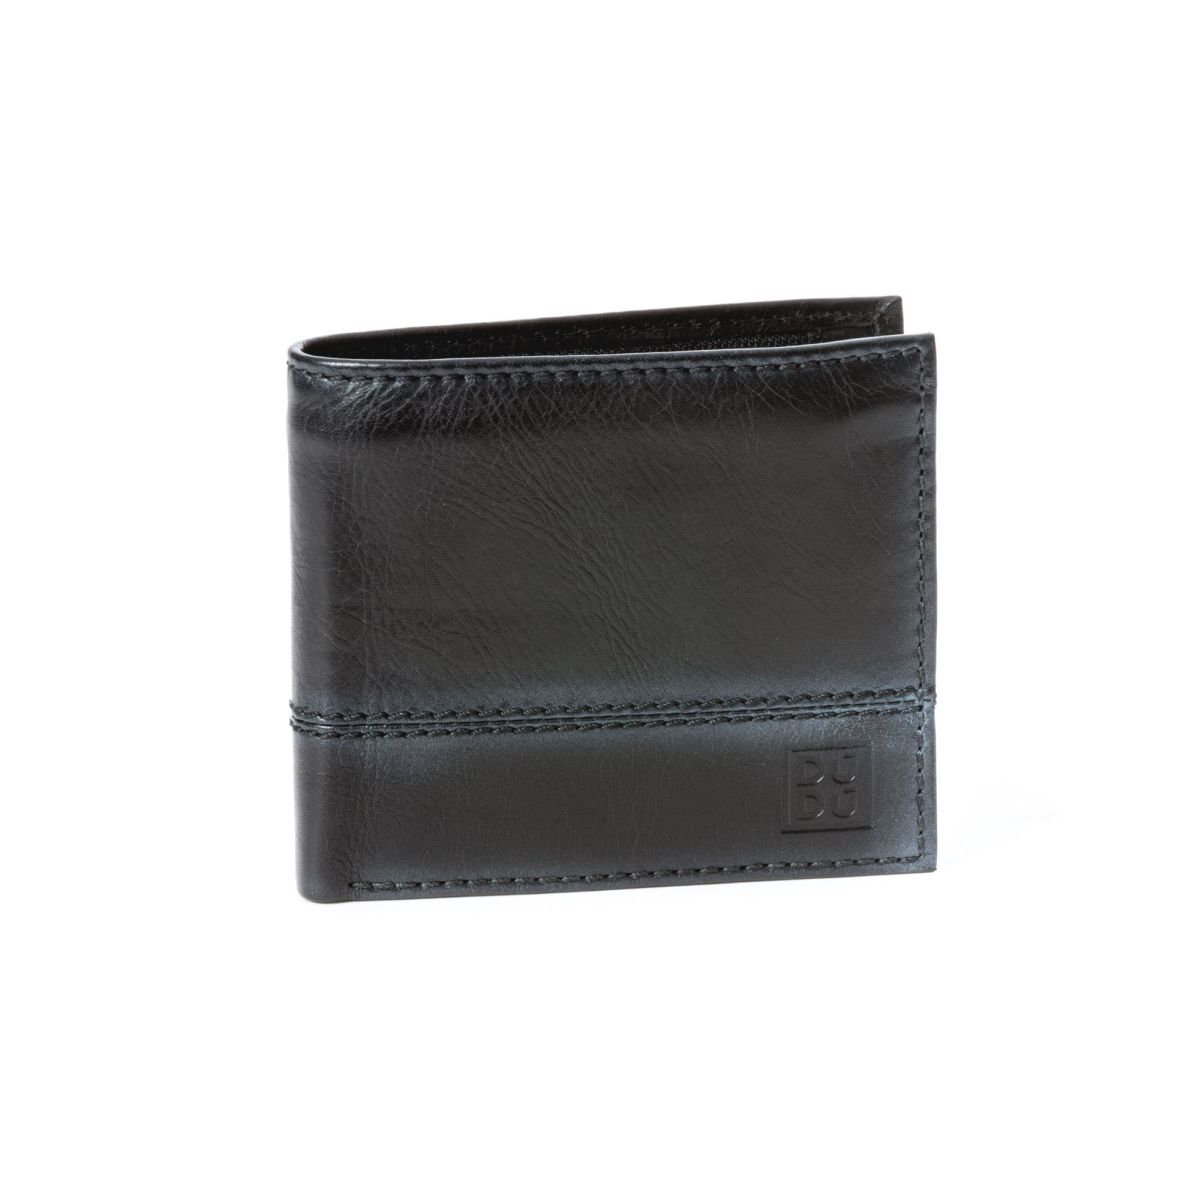 DuDu Unique Leather Wallet With Coin Purse - Black | Wallets Online